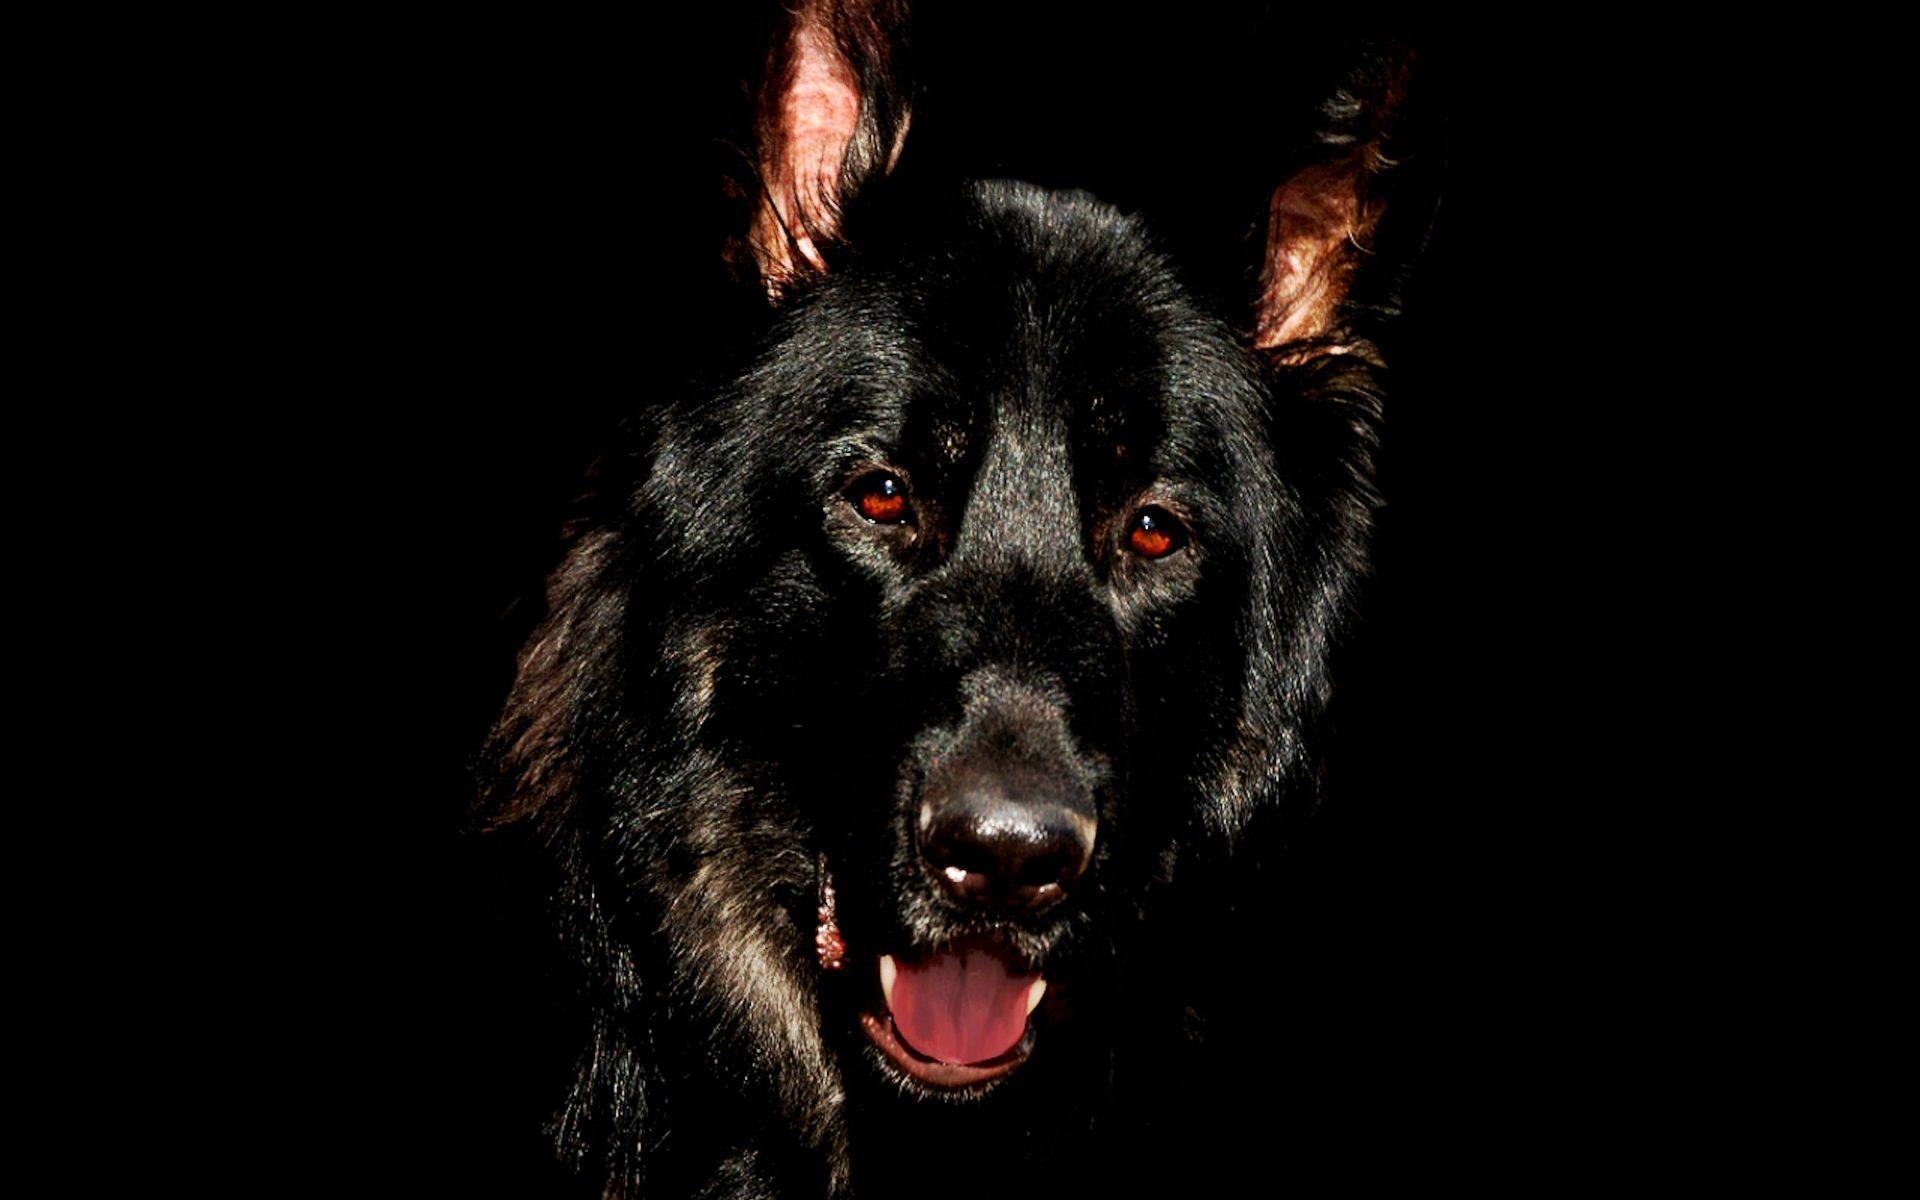 Dog Wallpaper, Animal Background Image, Free Image, Hairy Dogs